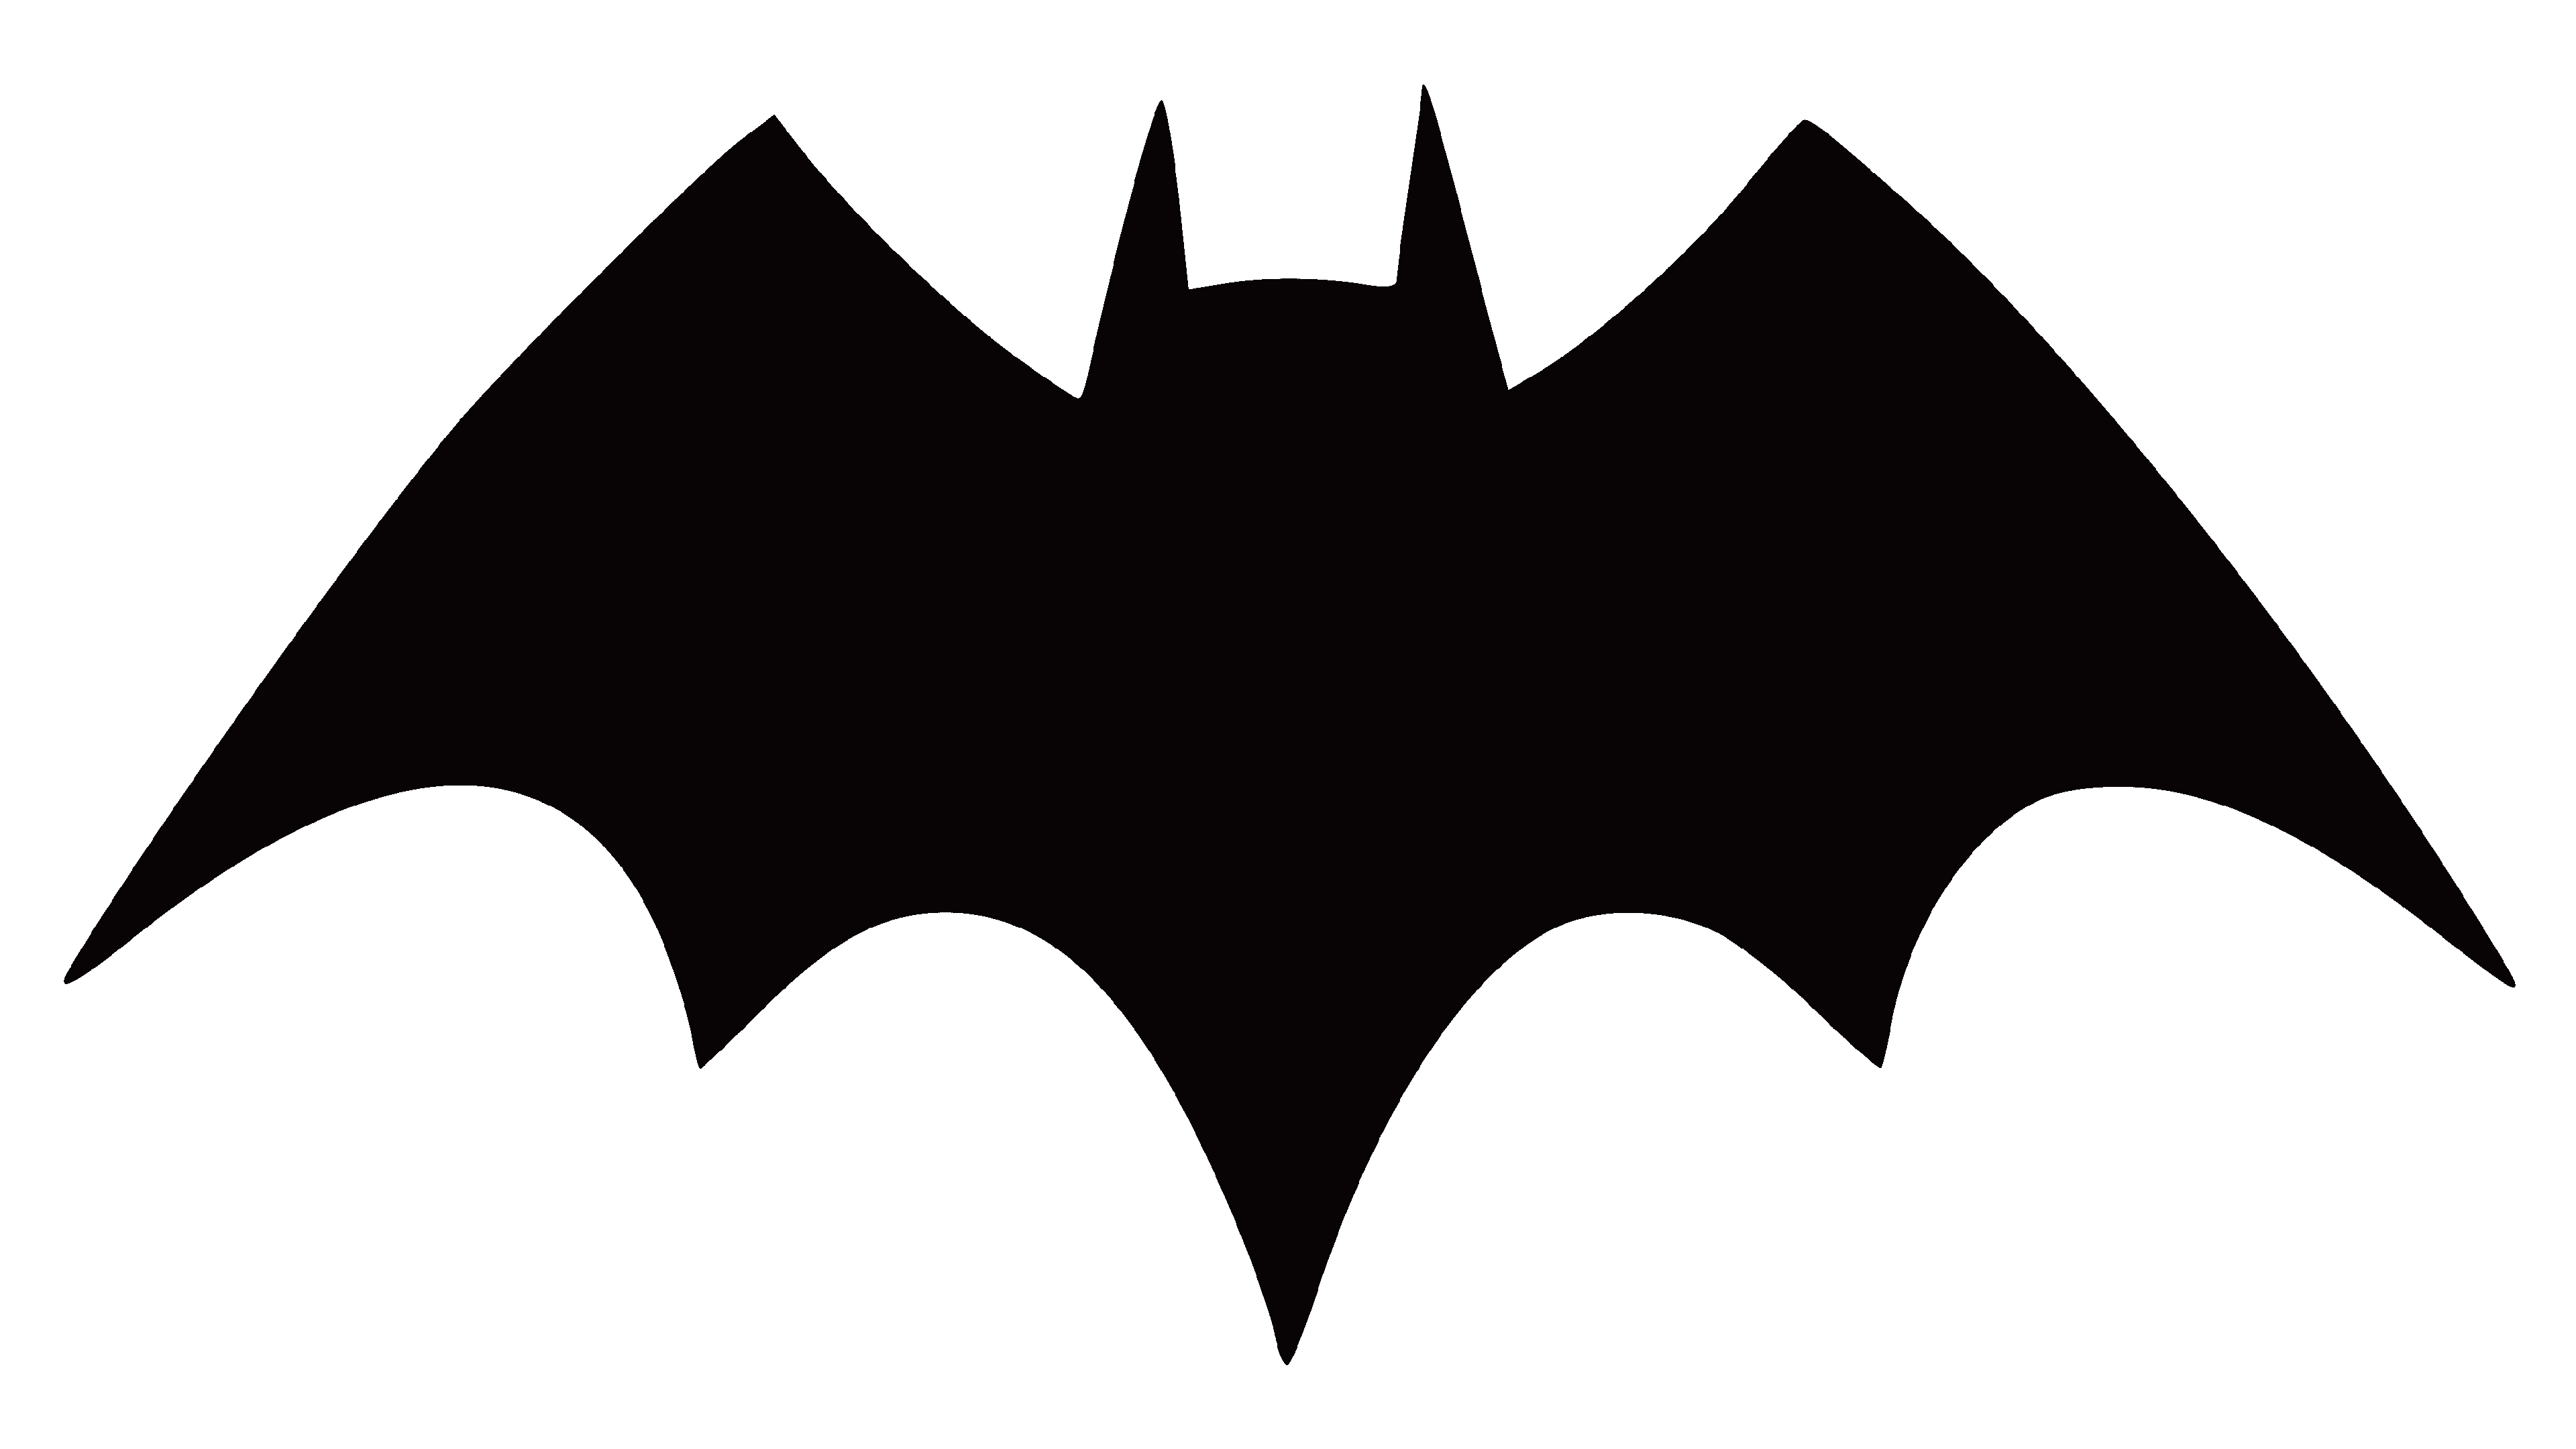 vintage batman logo png